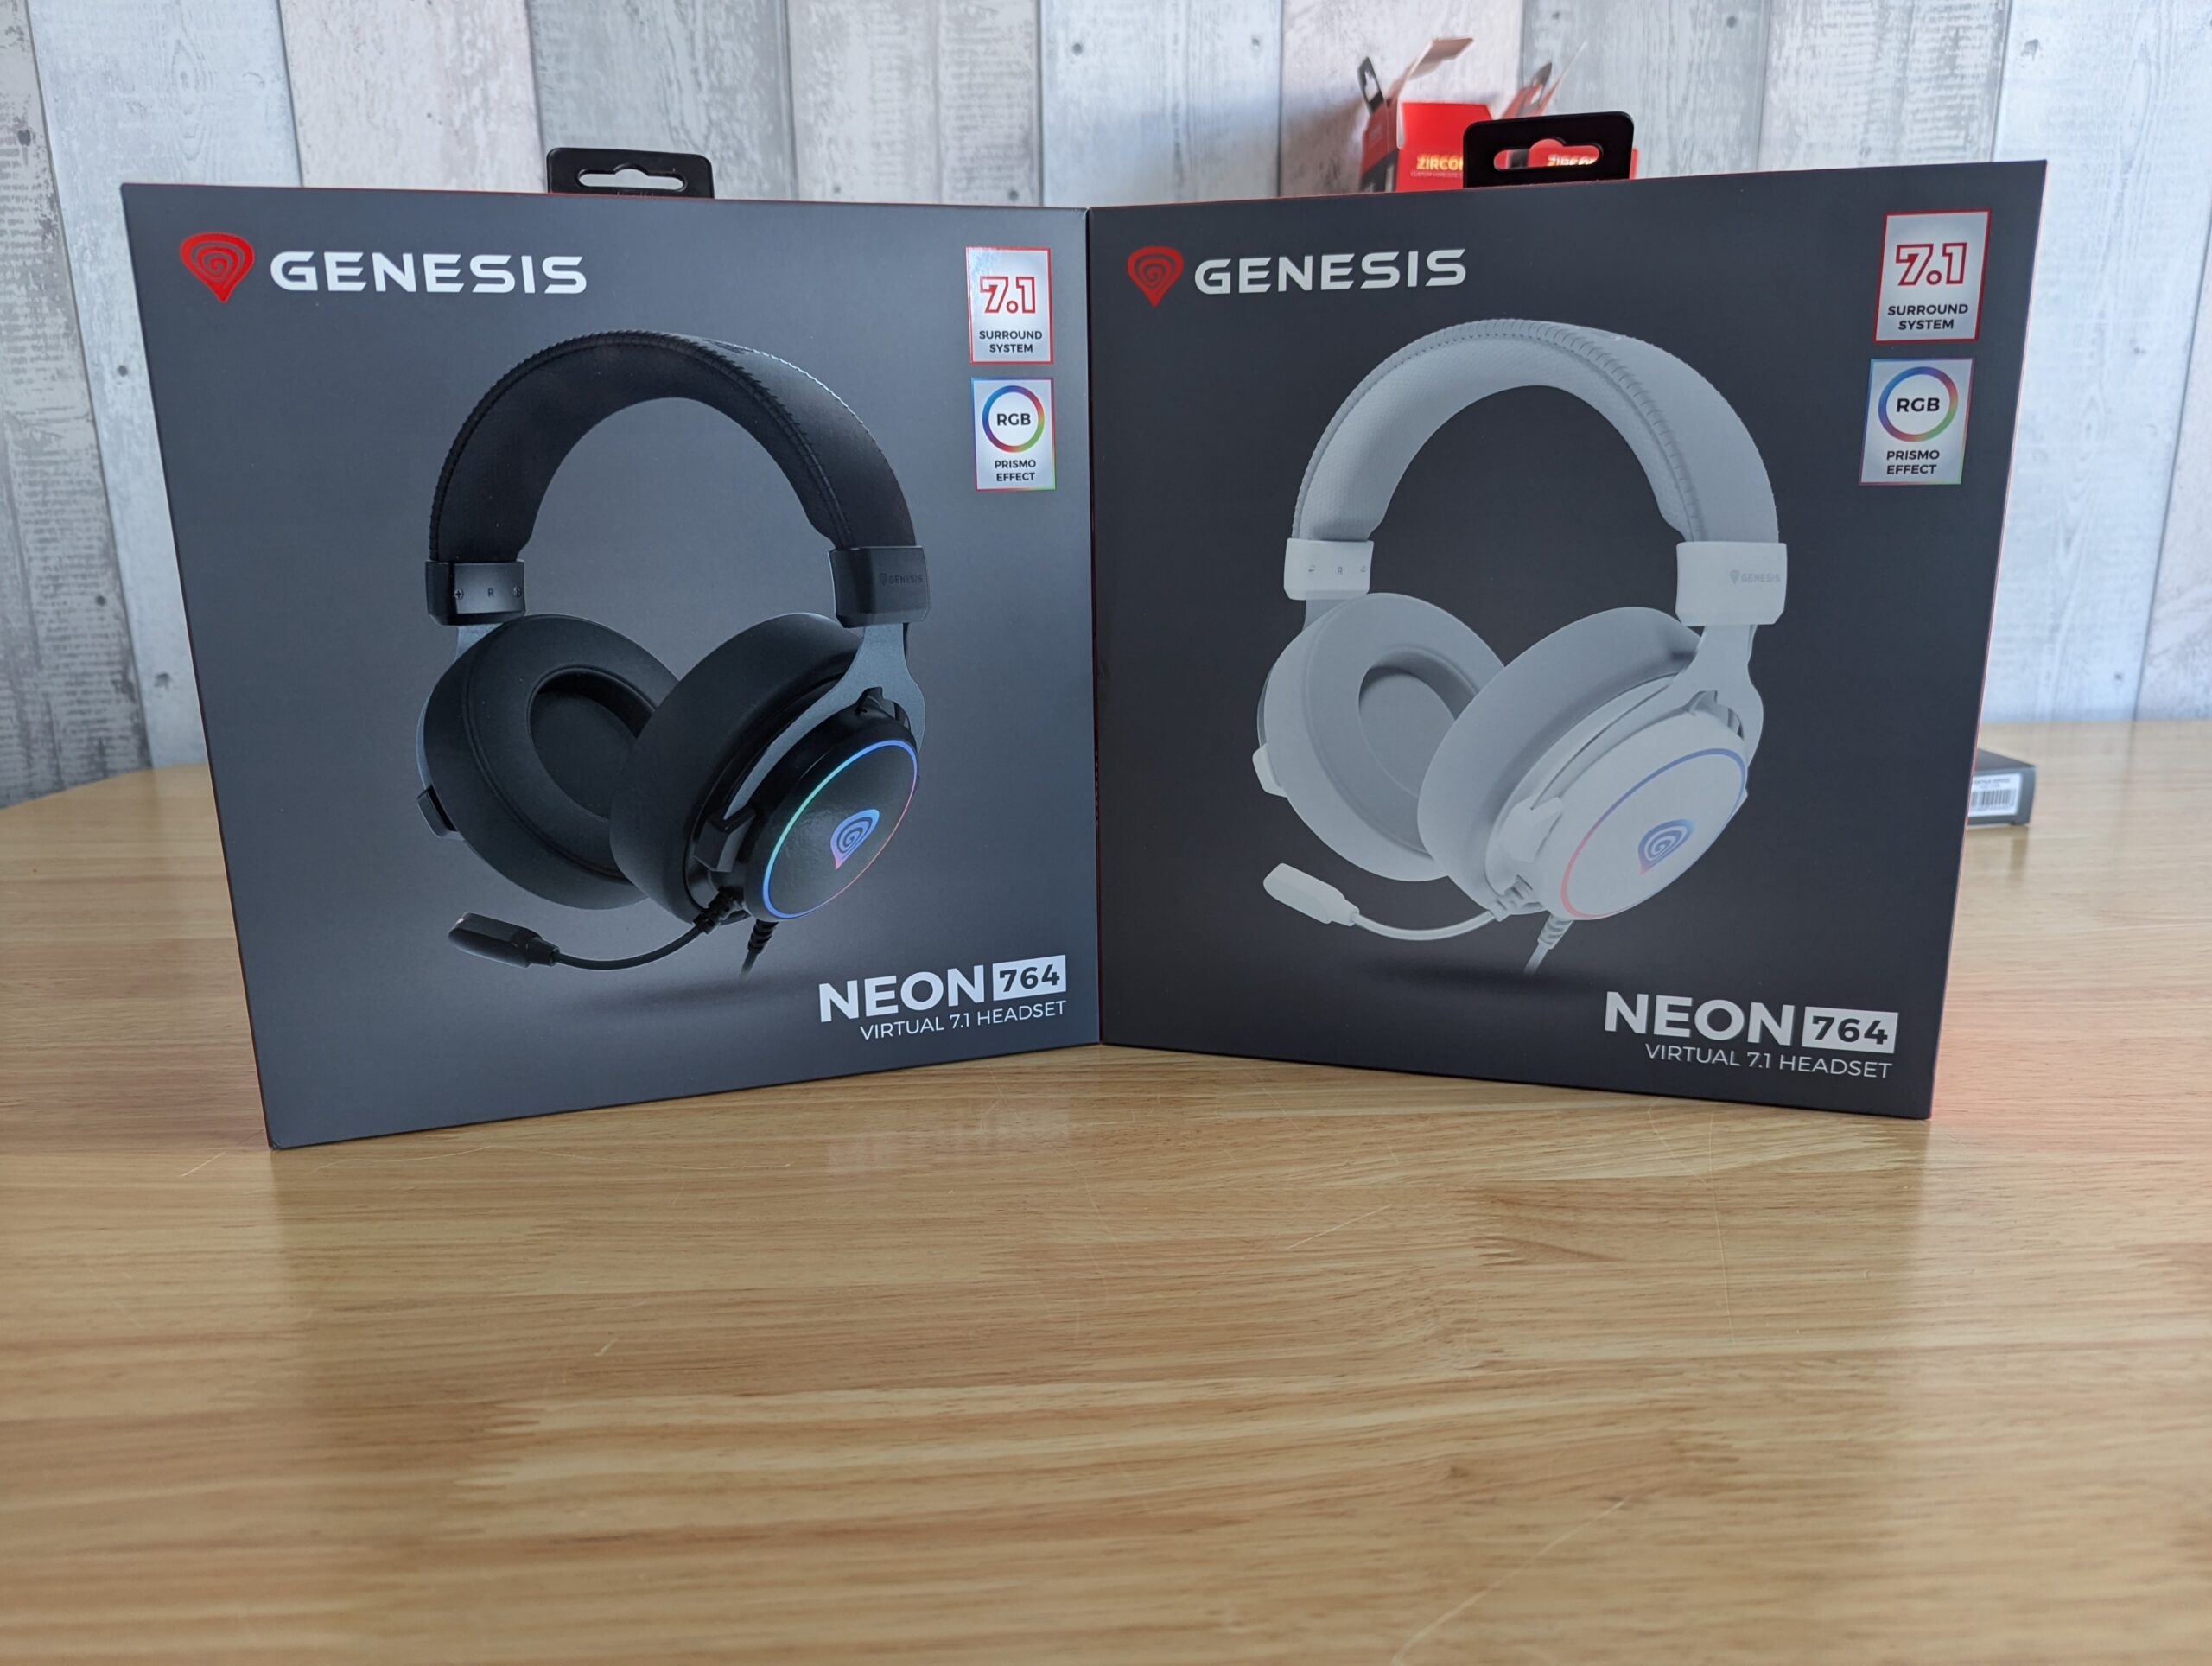 Genesis Neon 764 Gaming Headset Review